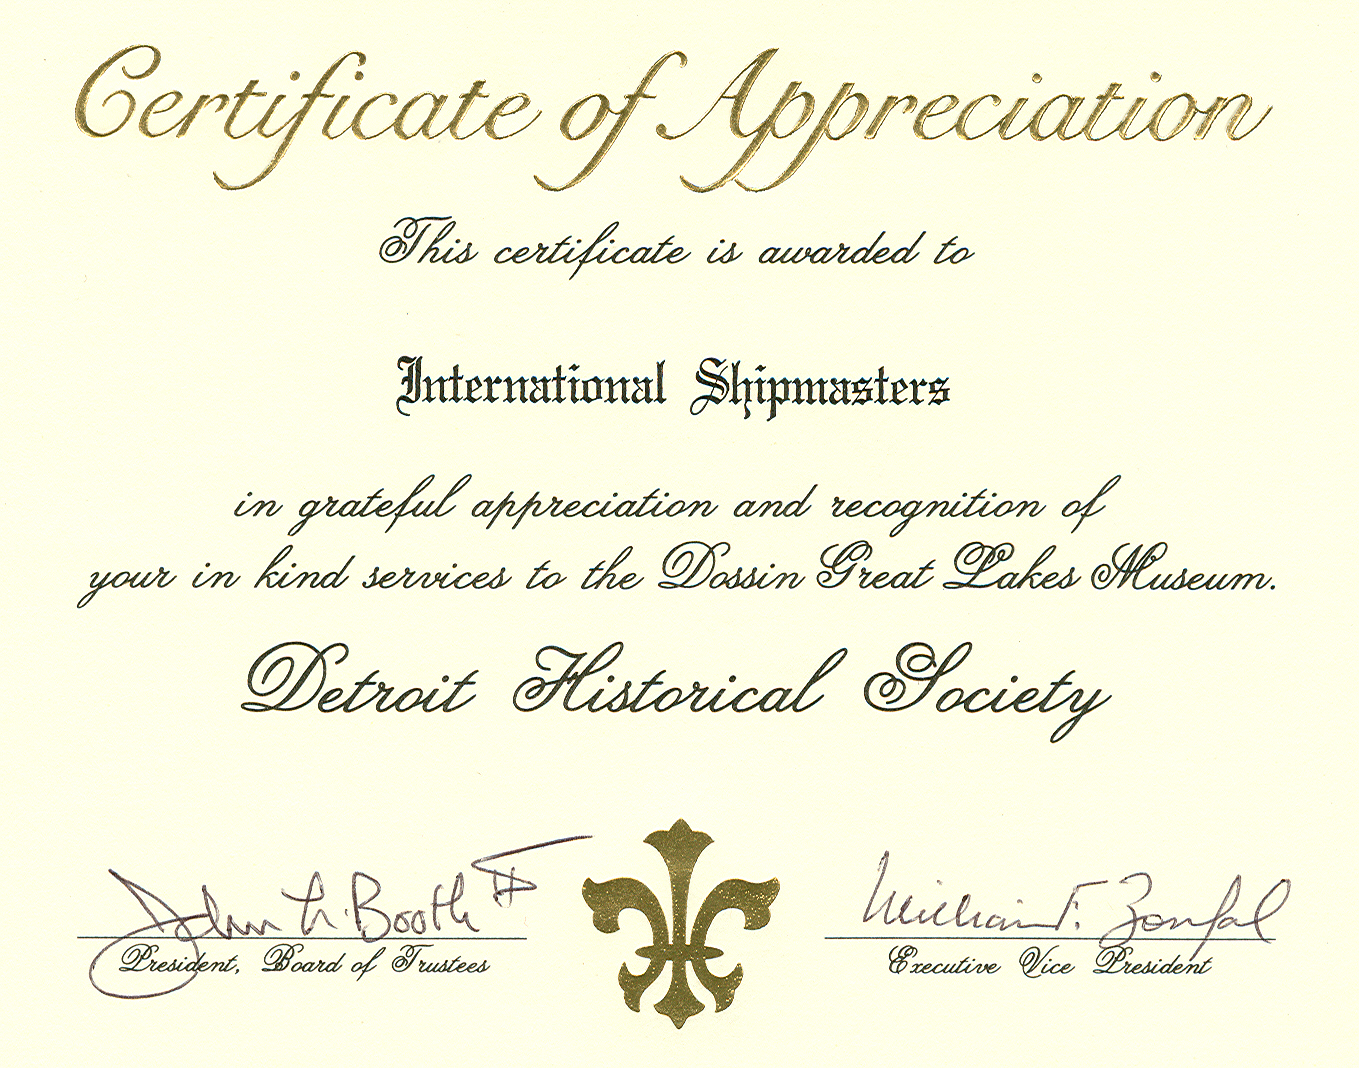 International Shipmasters #39 Association Detroit Lodge No 7